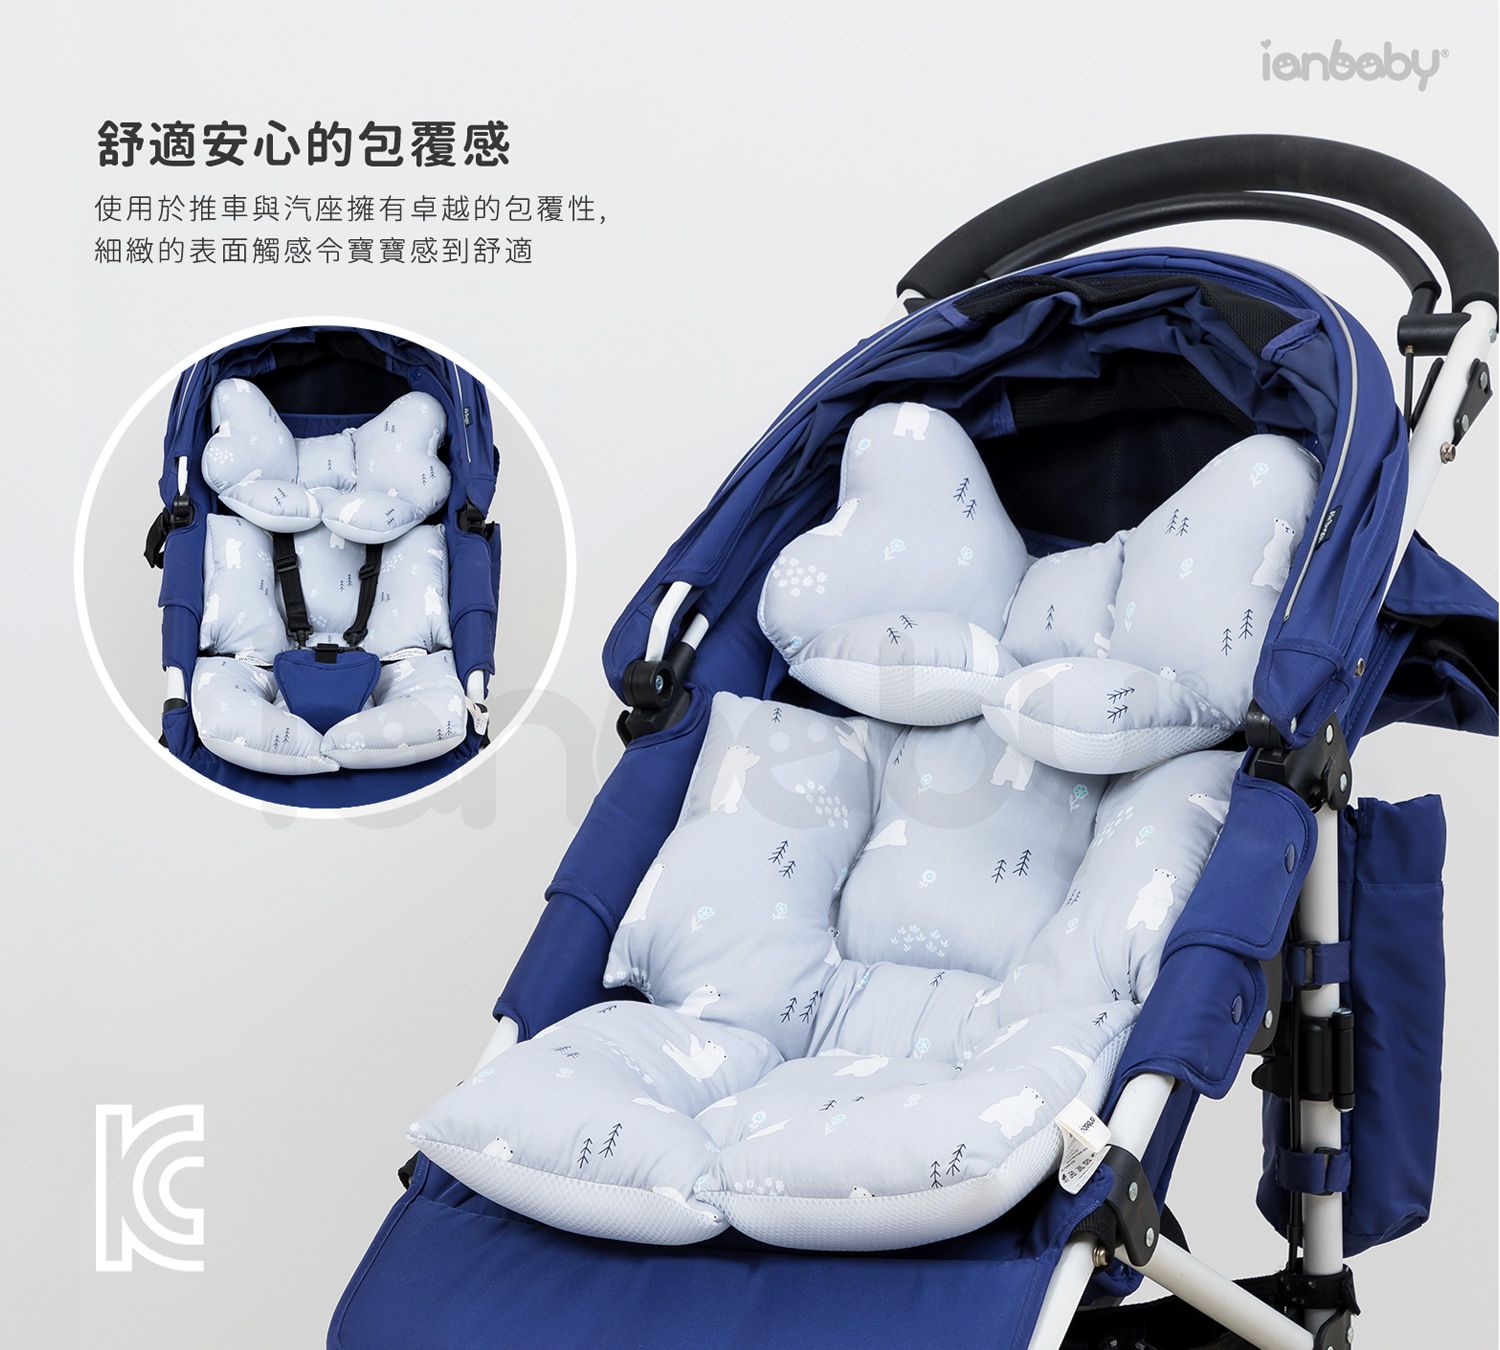 O-BS_11.jpg/ 包覆墊適用於各種嬰兒推車、汽座與搖椅，單手安裝一鍵固定，卓越的包覆性與細緻的表面觸感令寶寶感到舒適。